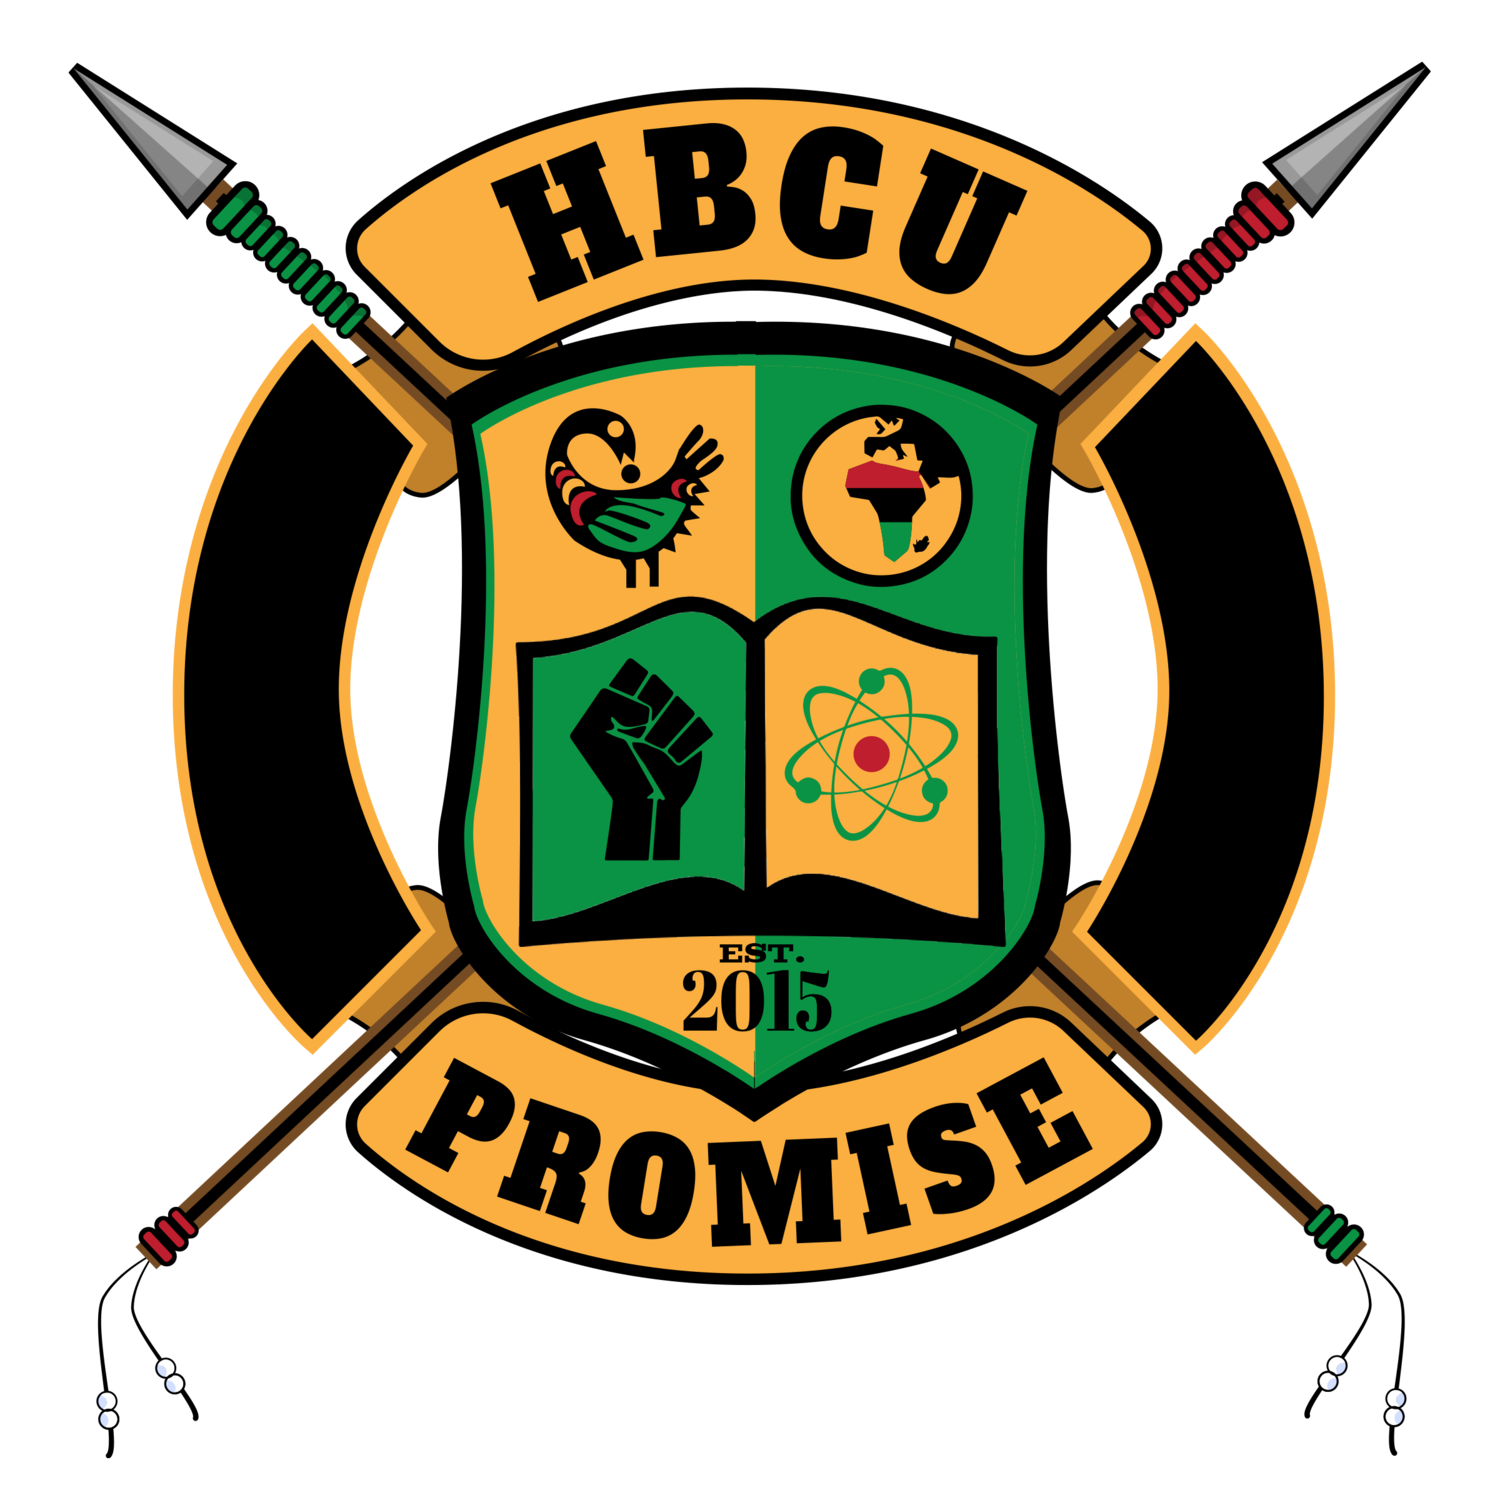 The HBCU Promise